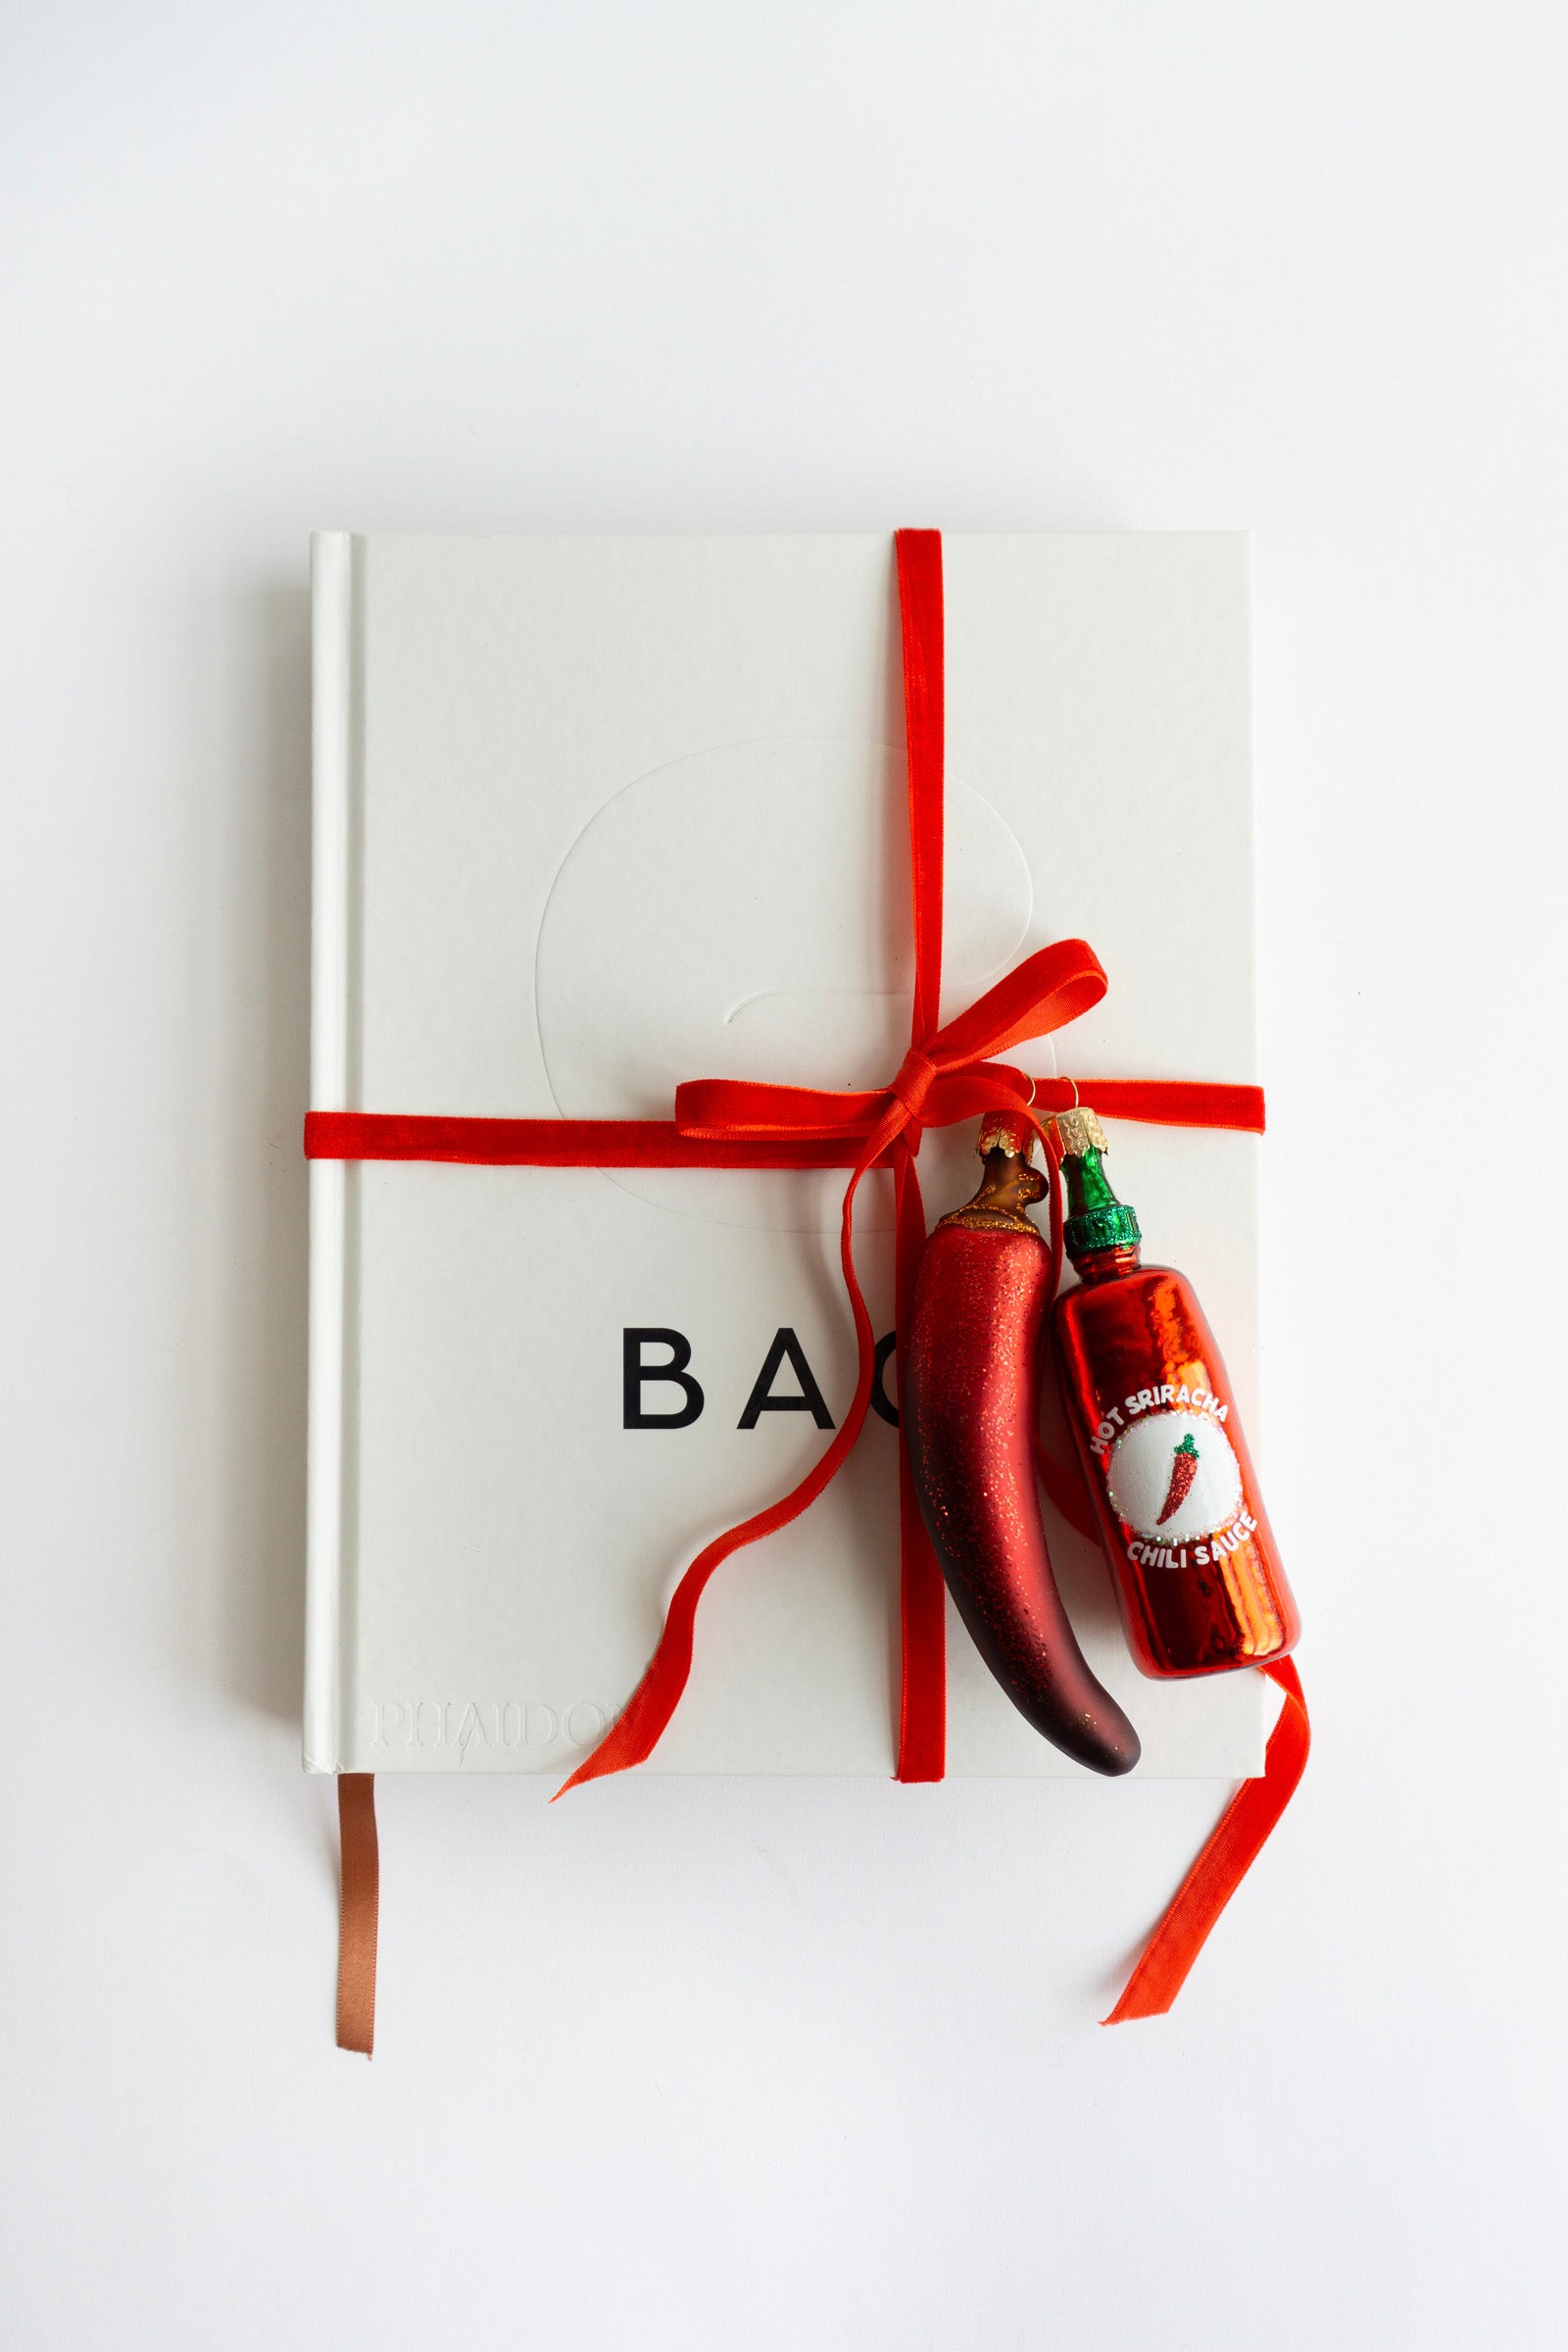 Bao: The Cookbook